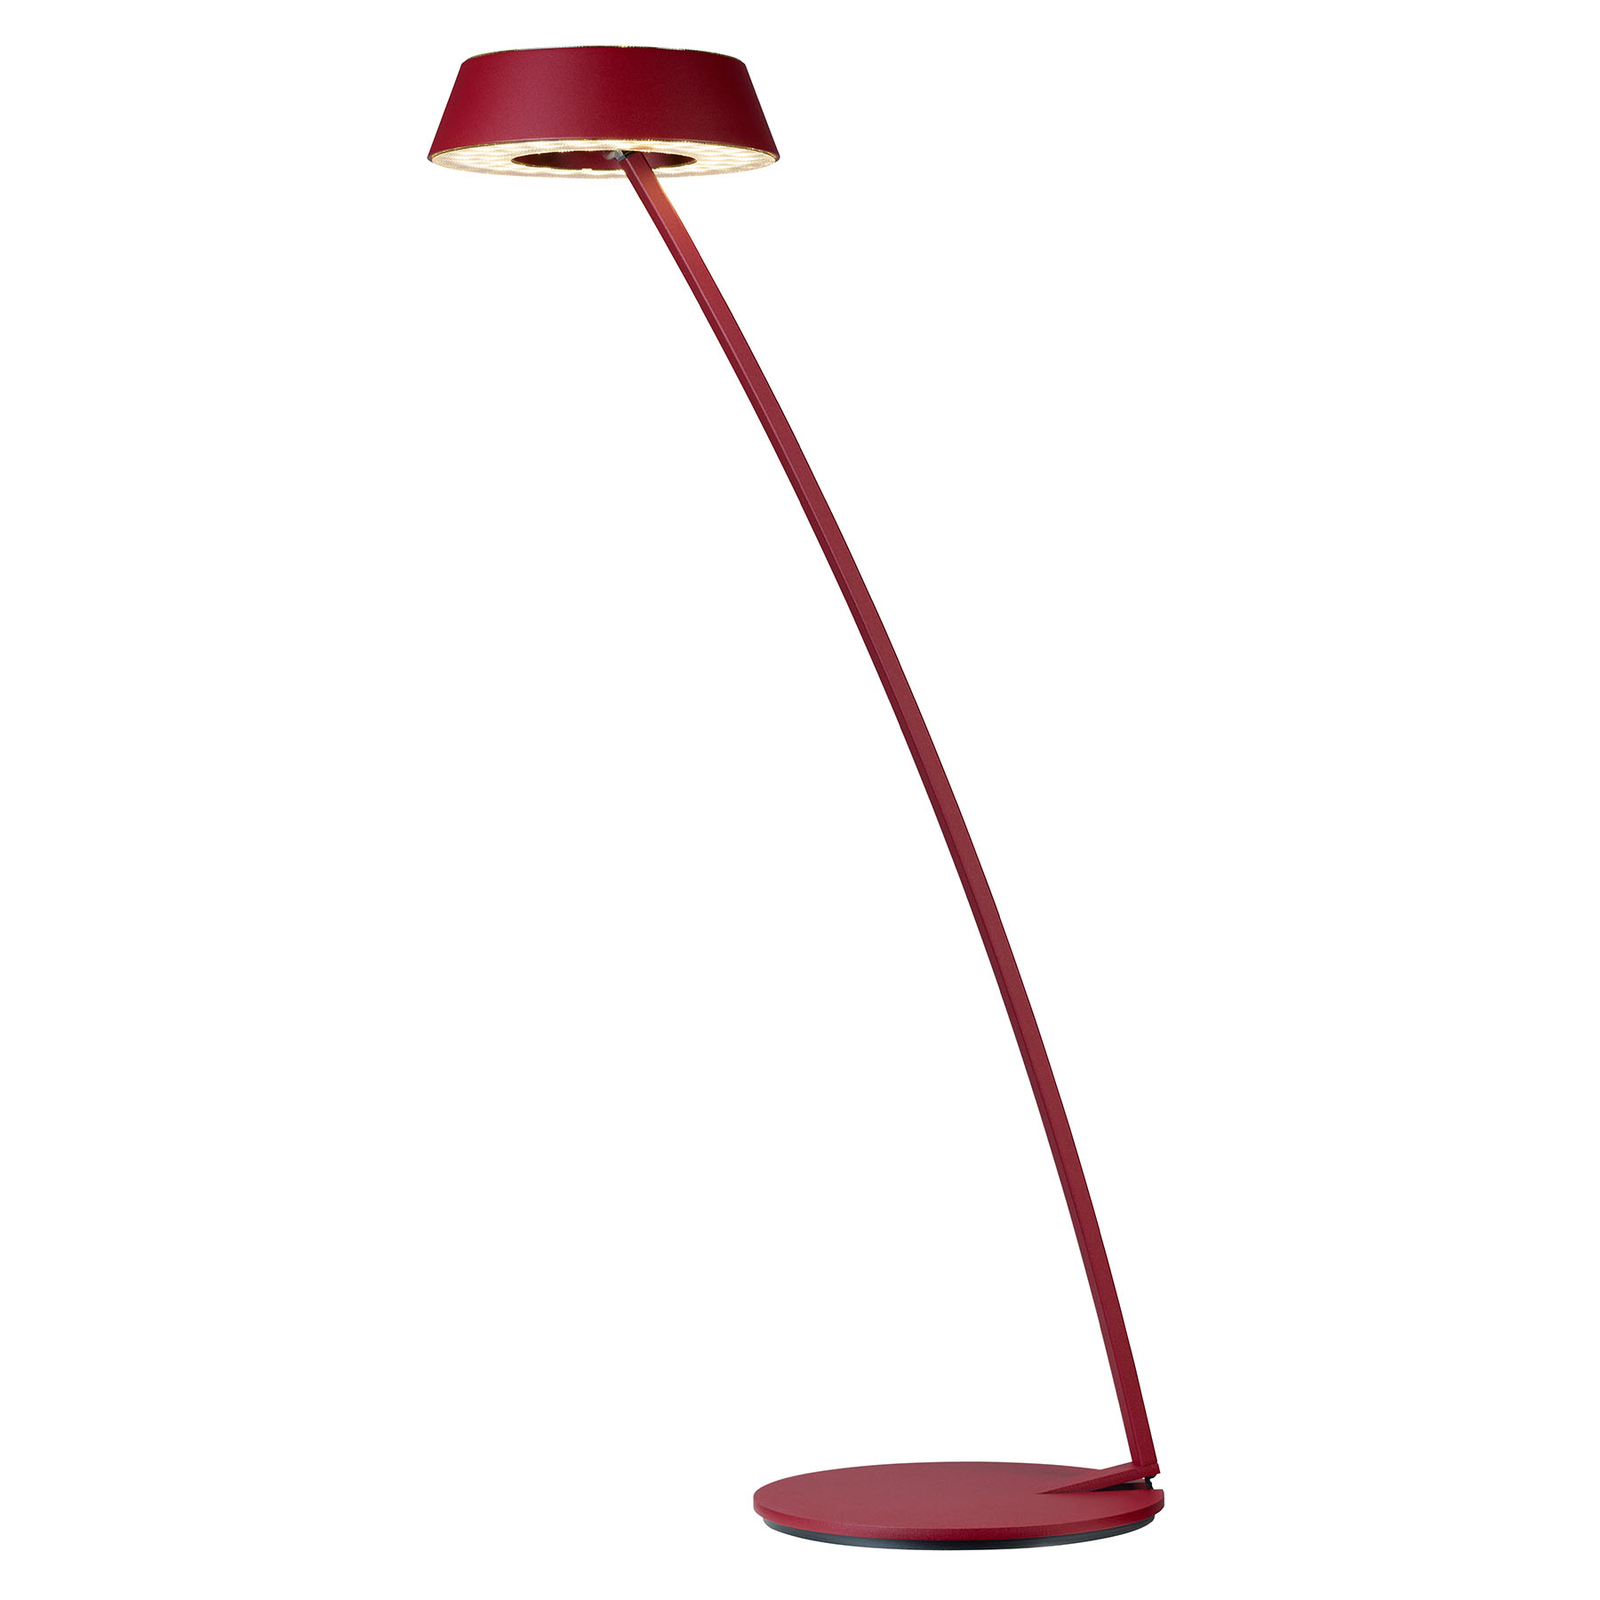 OLIGO Glance LED table lamp curved matt red